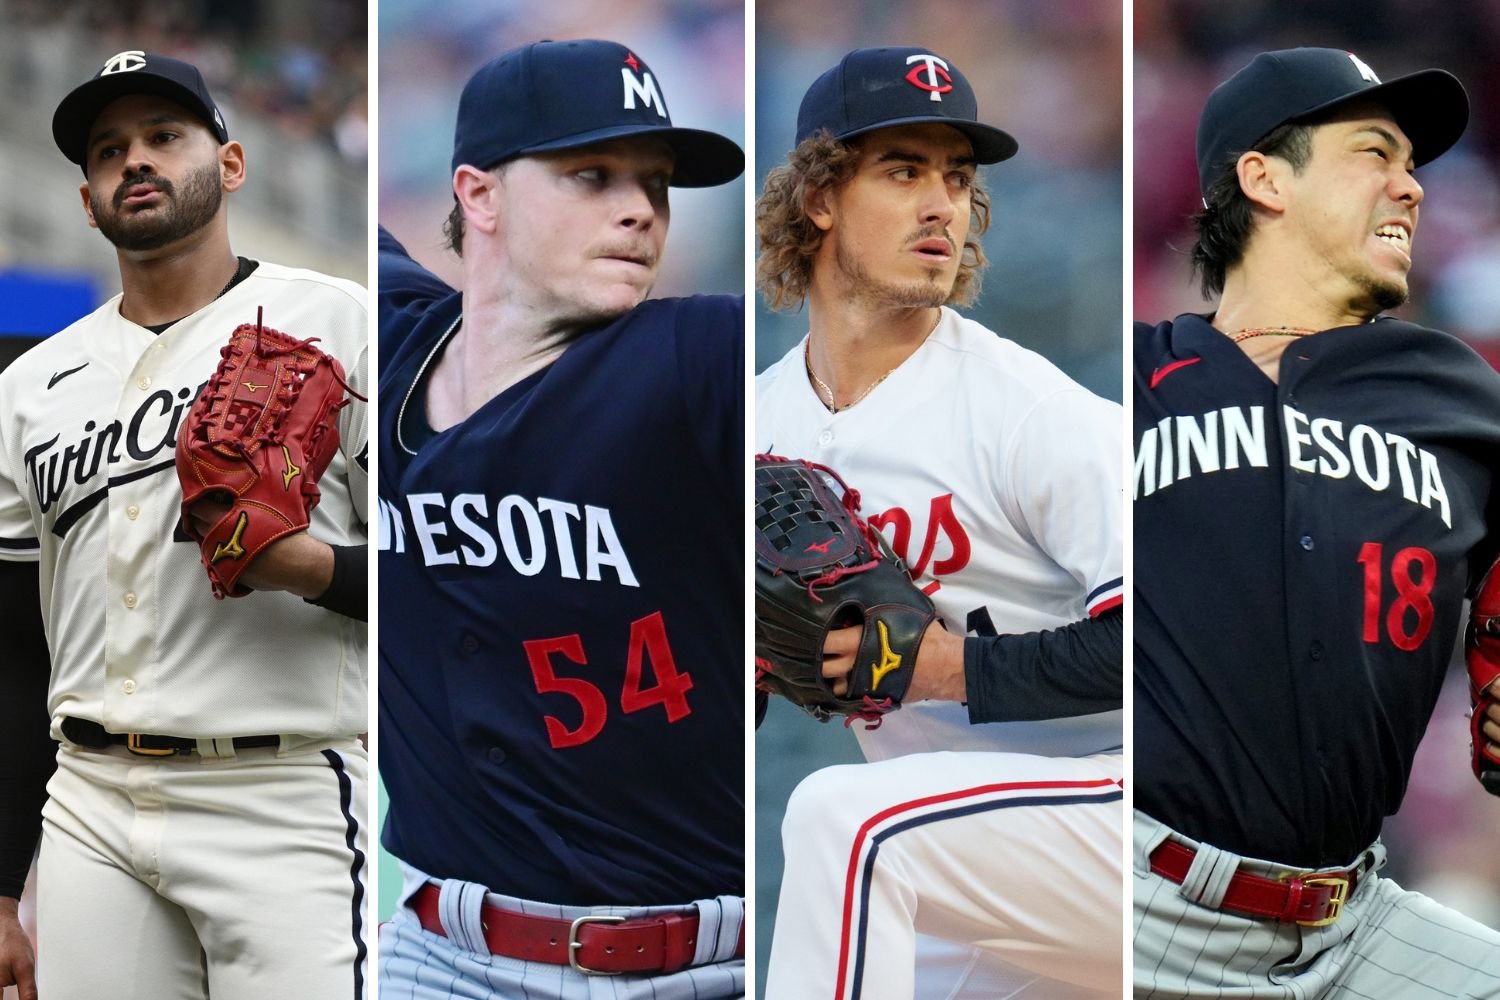 Minnesota Twins: Players weekend nicknames and uniforms revealed